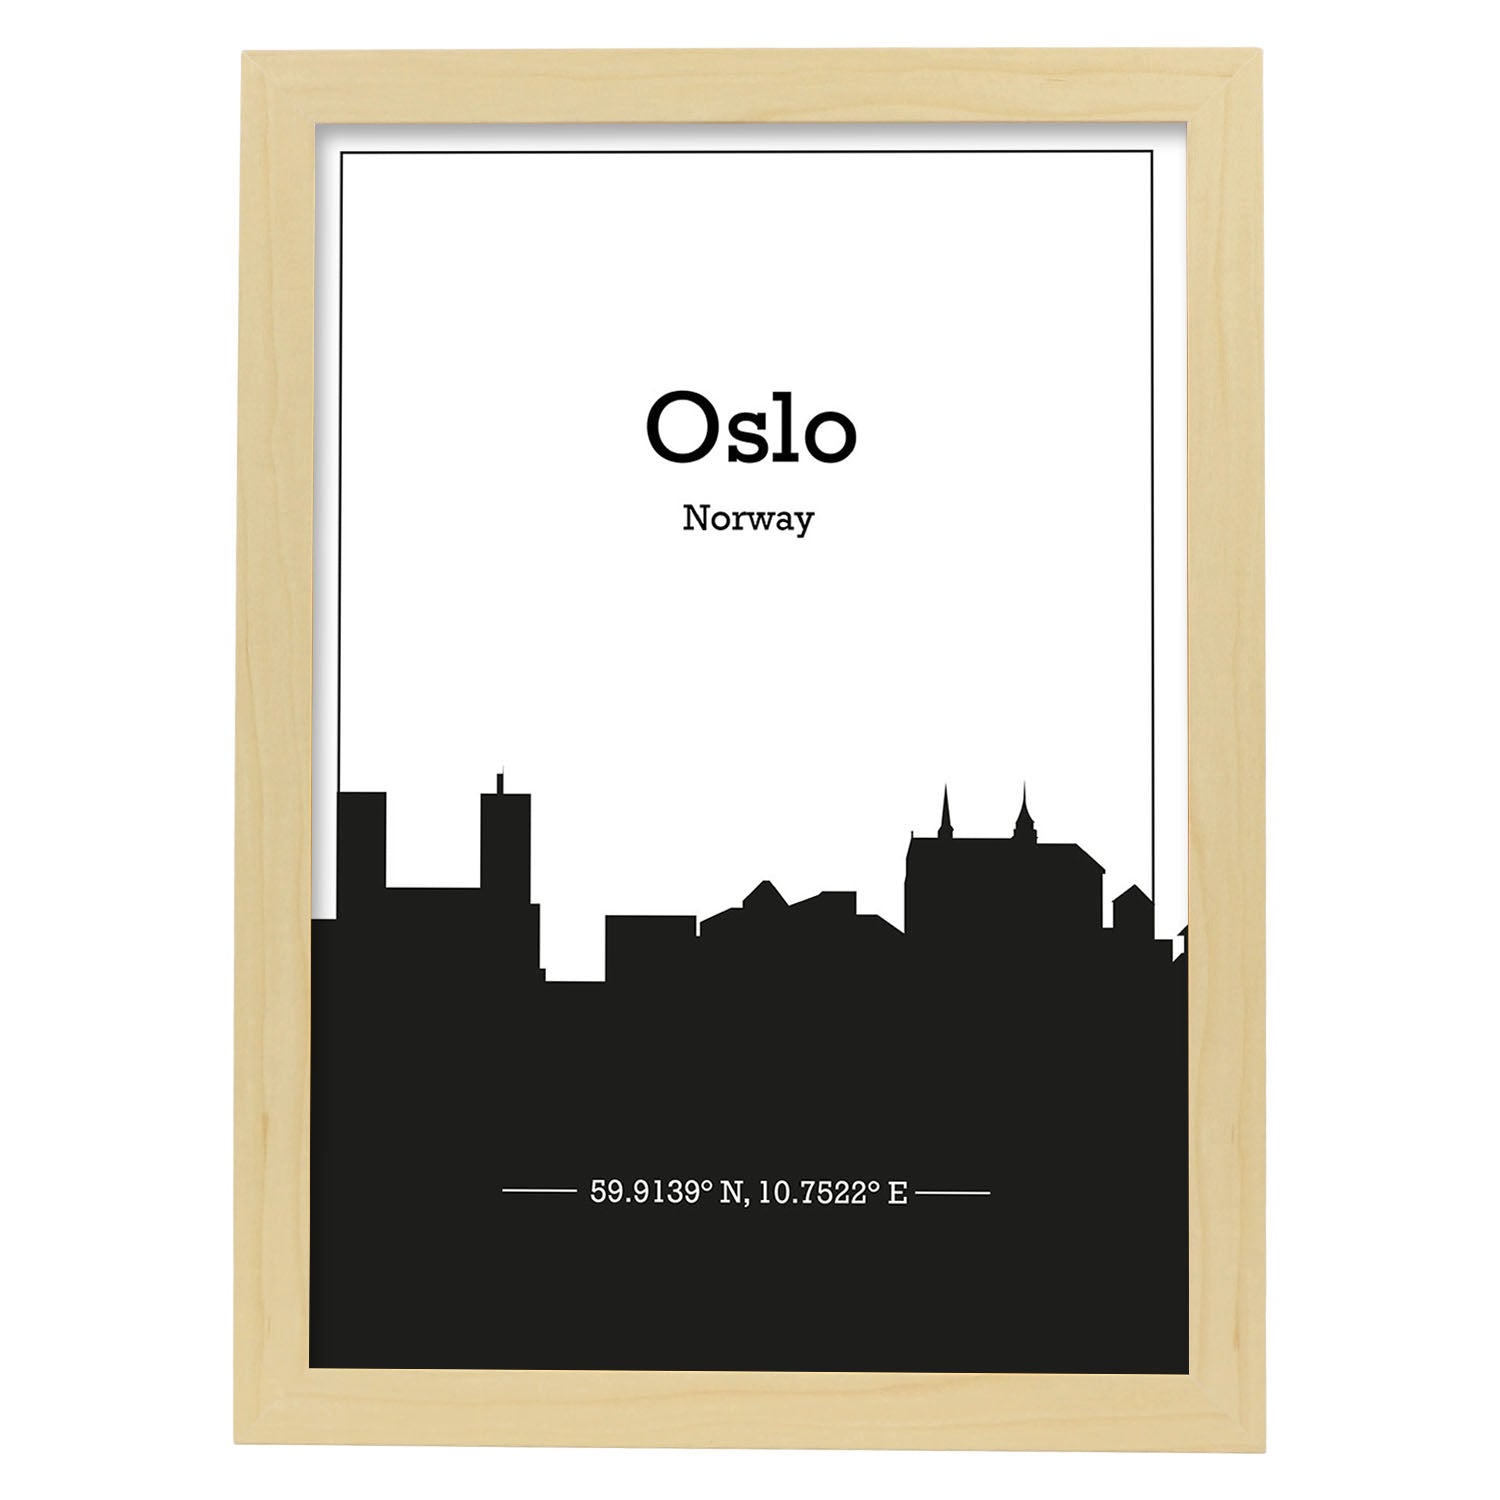 Poster con mapa de Oslo - Noruega. Láminas con Skyline de ciudades del norte de Europa con sombra negra.-Artwork-Nacnic-A4-Marco Madera clara-Nacnic Estudio SL